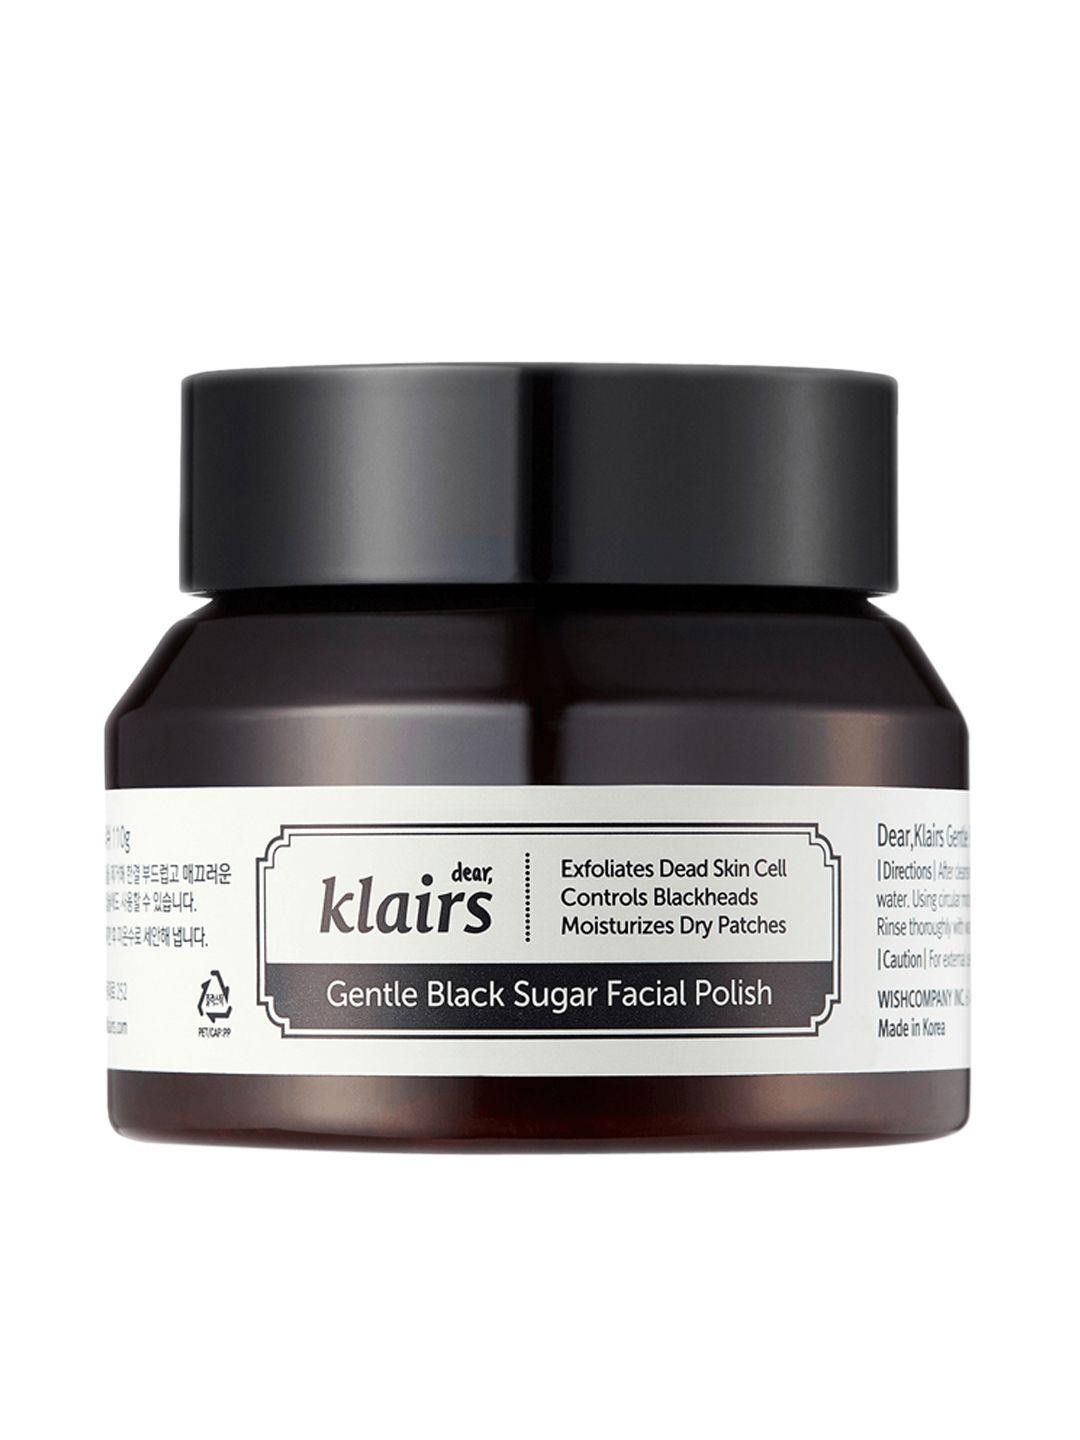 dear klairs gentle black sugar facial polish for skin brightening & remove blackheads-110g